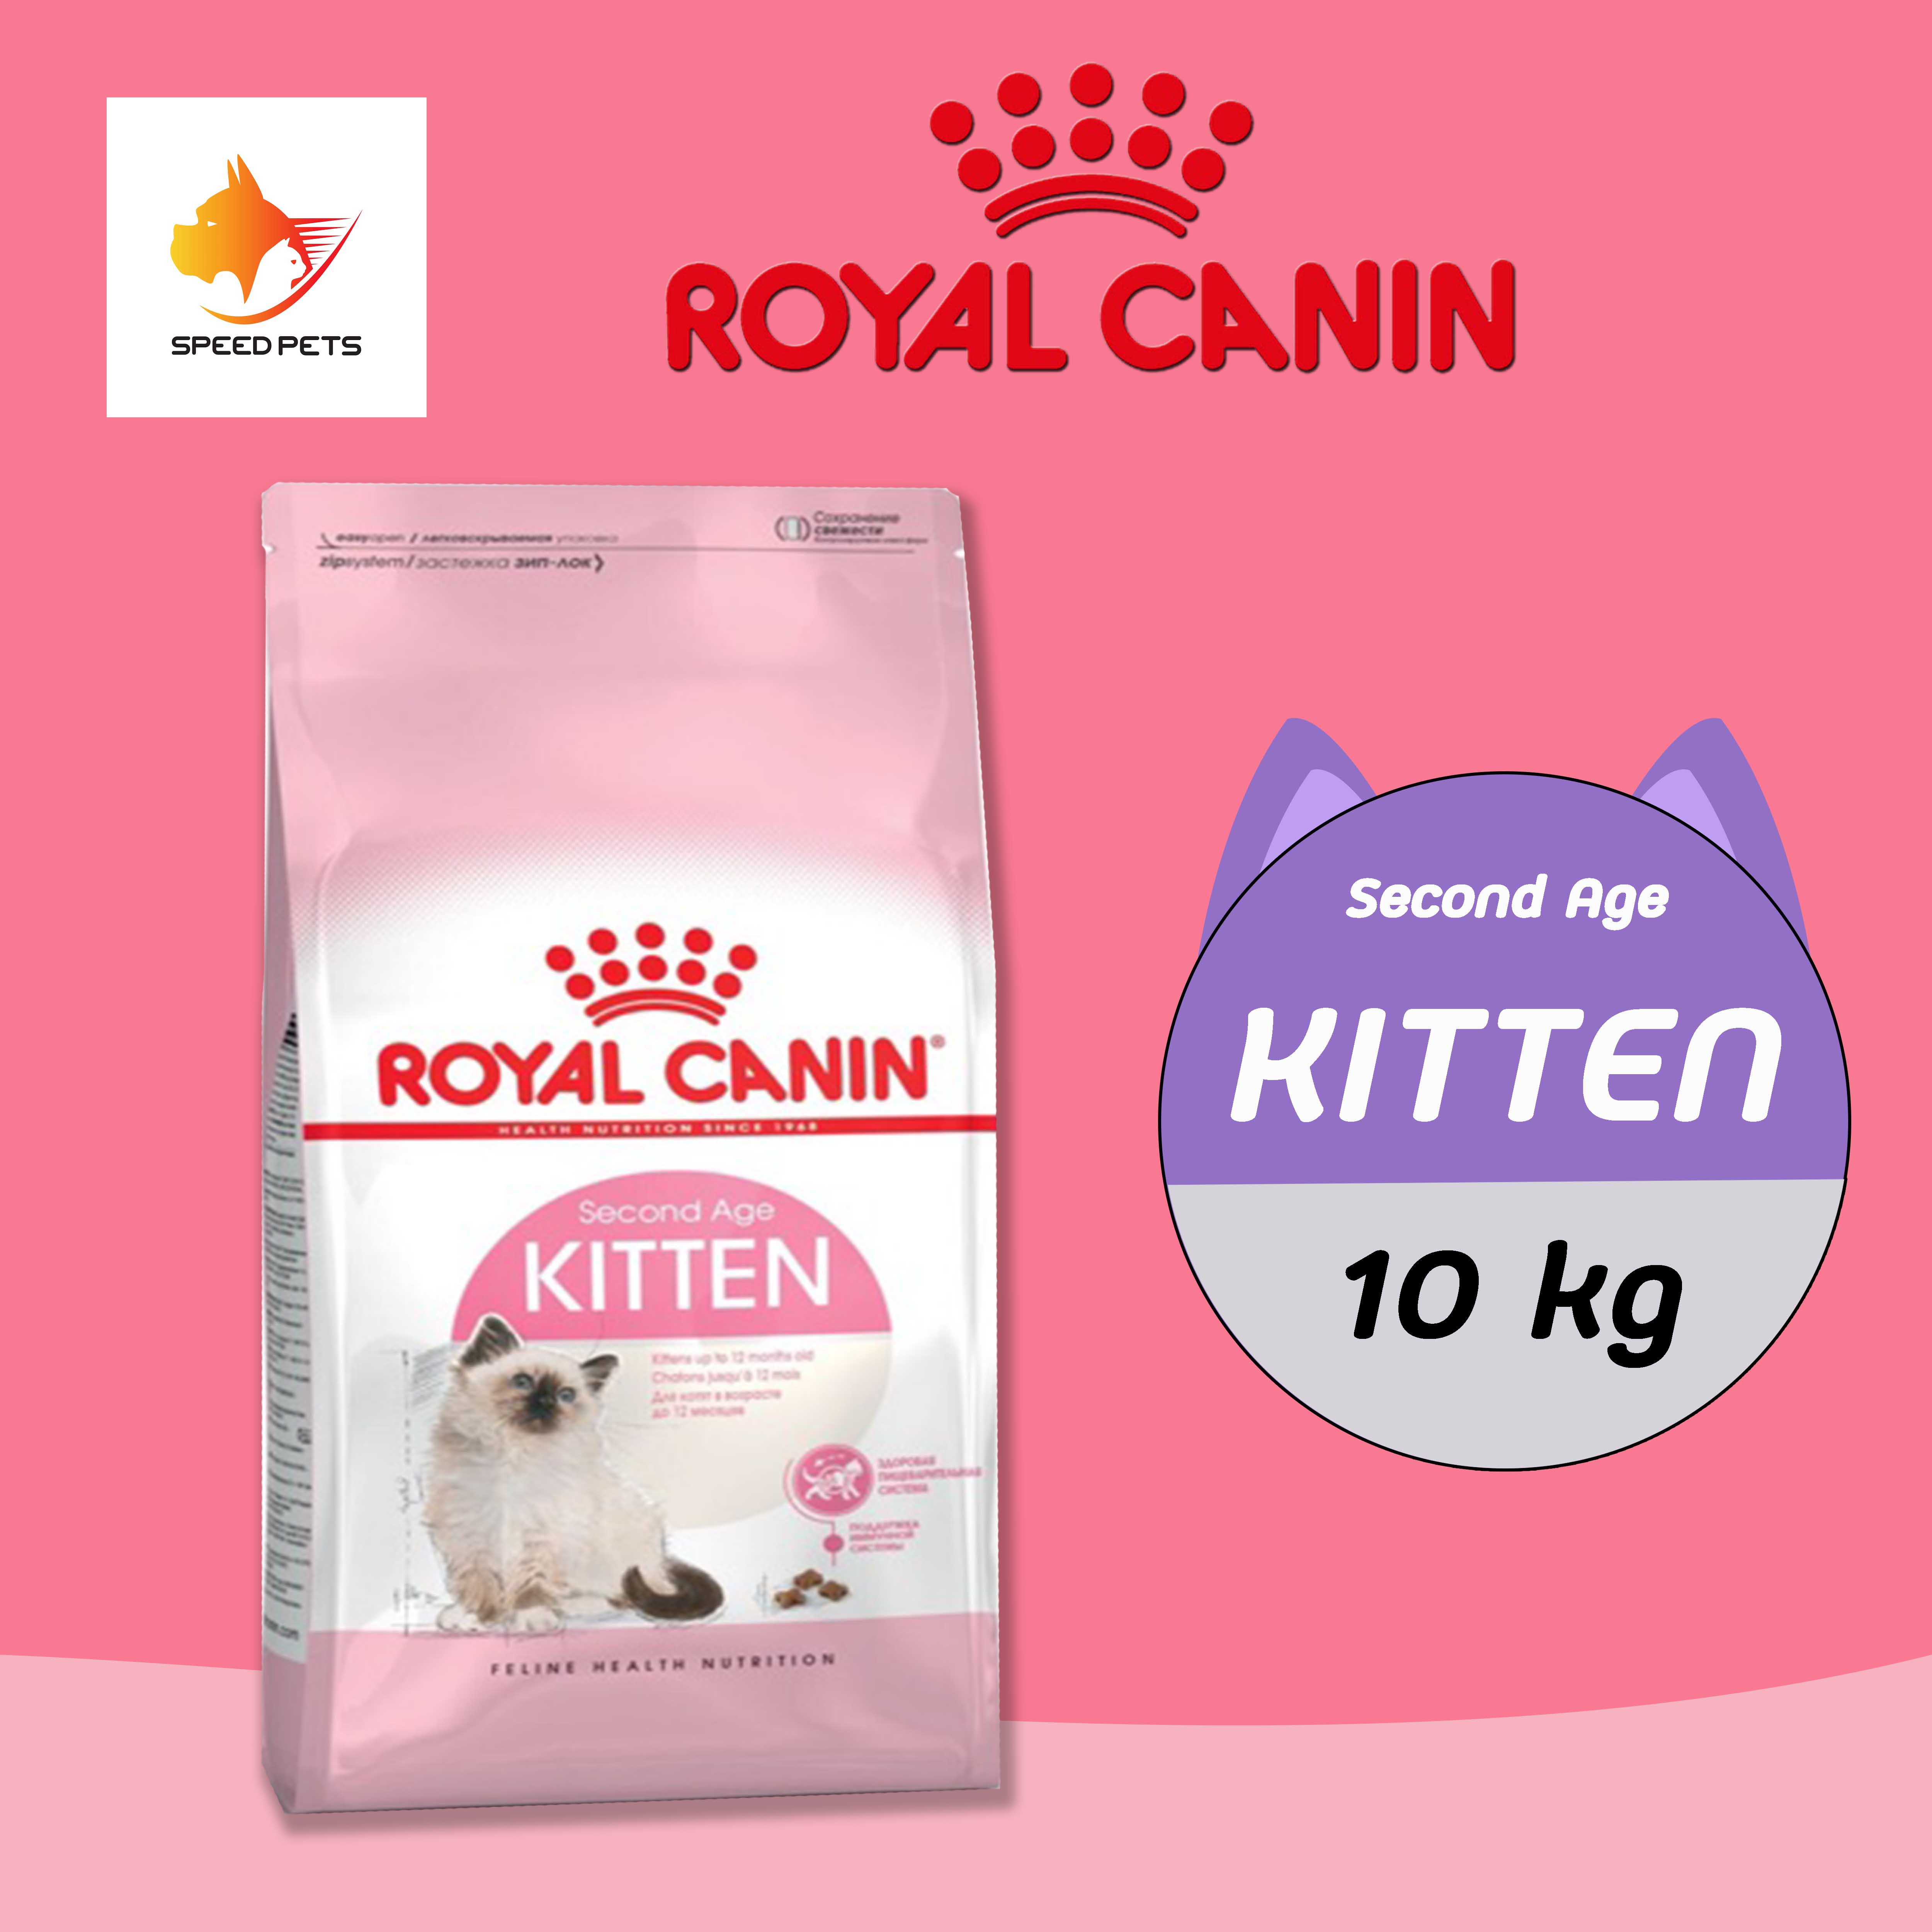 Royal Canin Kitten Food 10 kg โรยัล คานิน อาหารลูกแมวแบบเม็ด อายุ 4 - 12 เดือน 10 กก